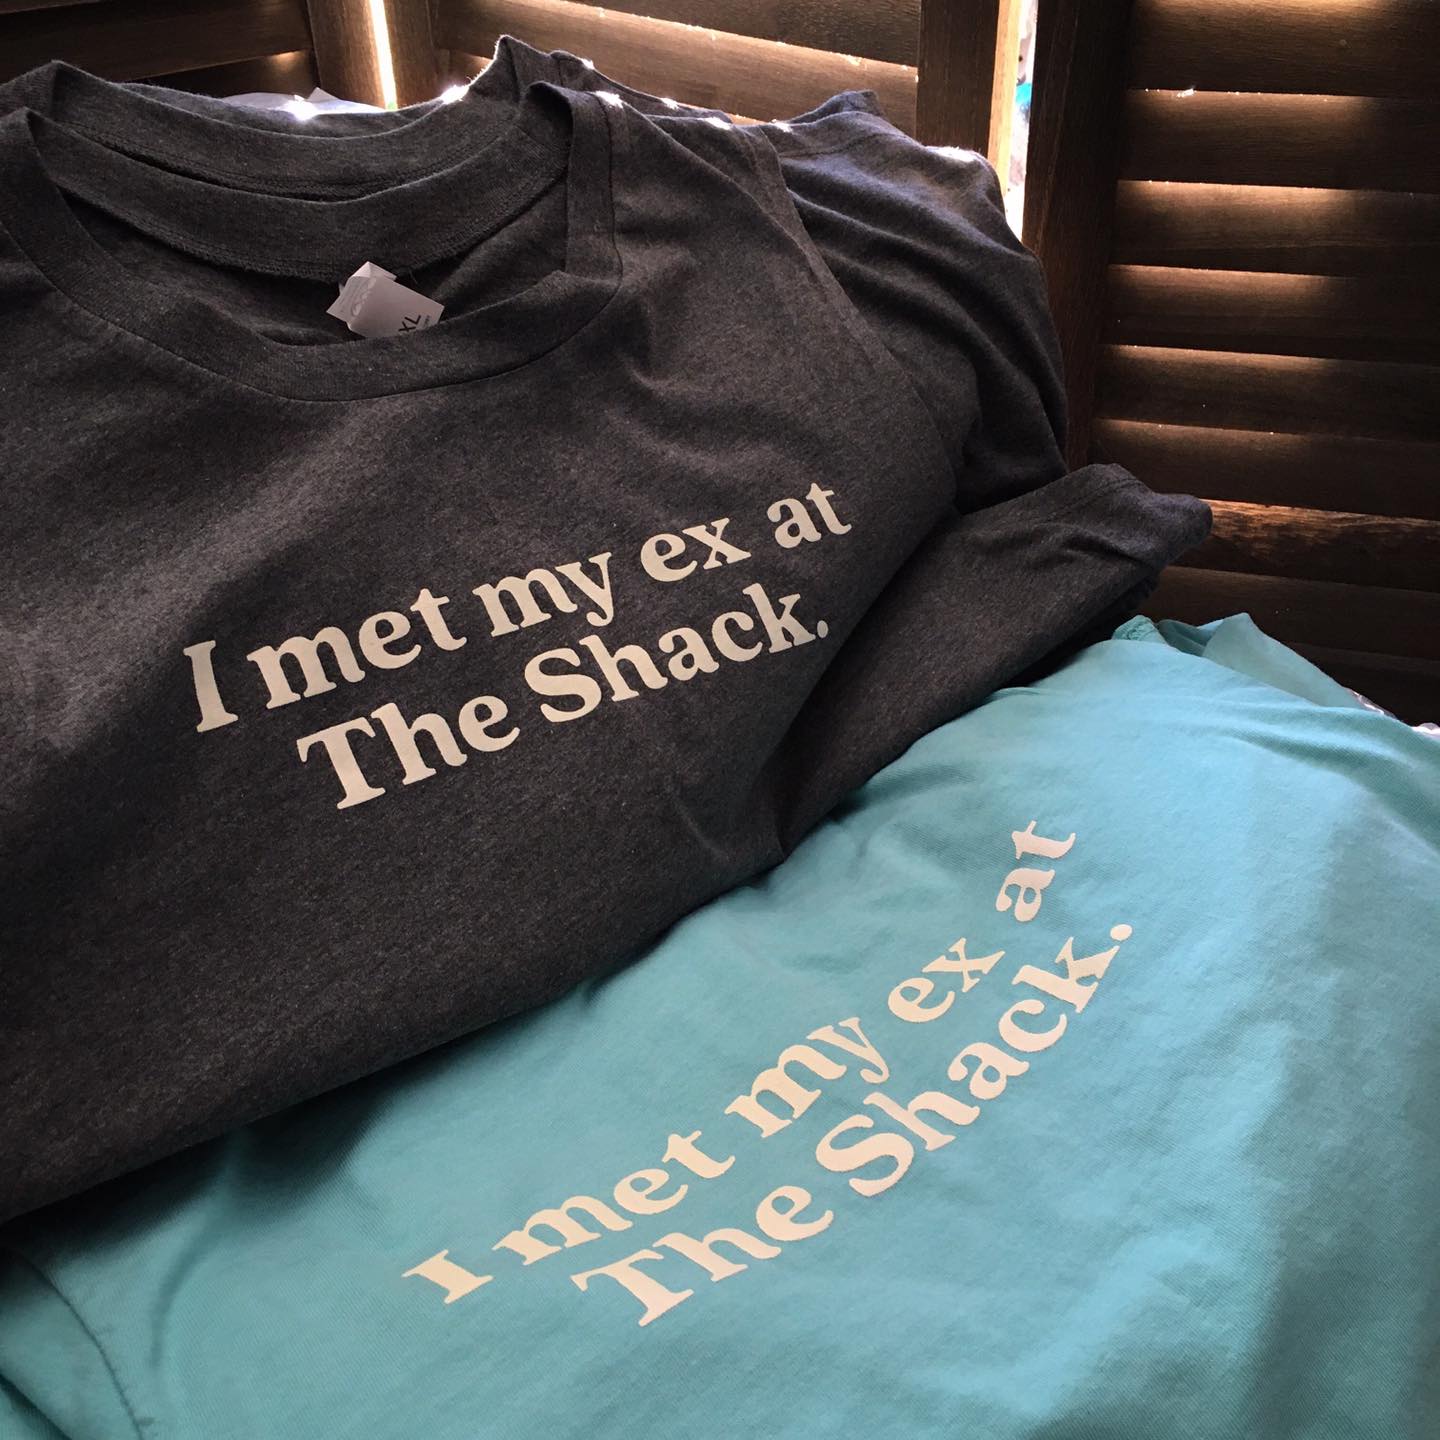 The Shack custom screen printed t-shirts by RVA Threads